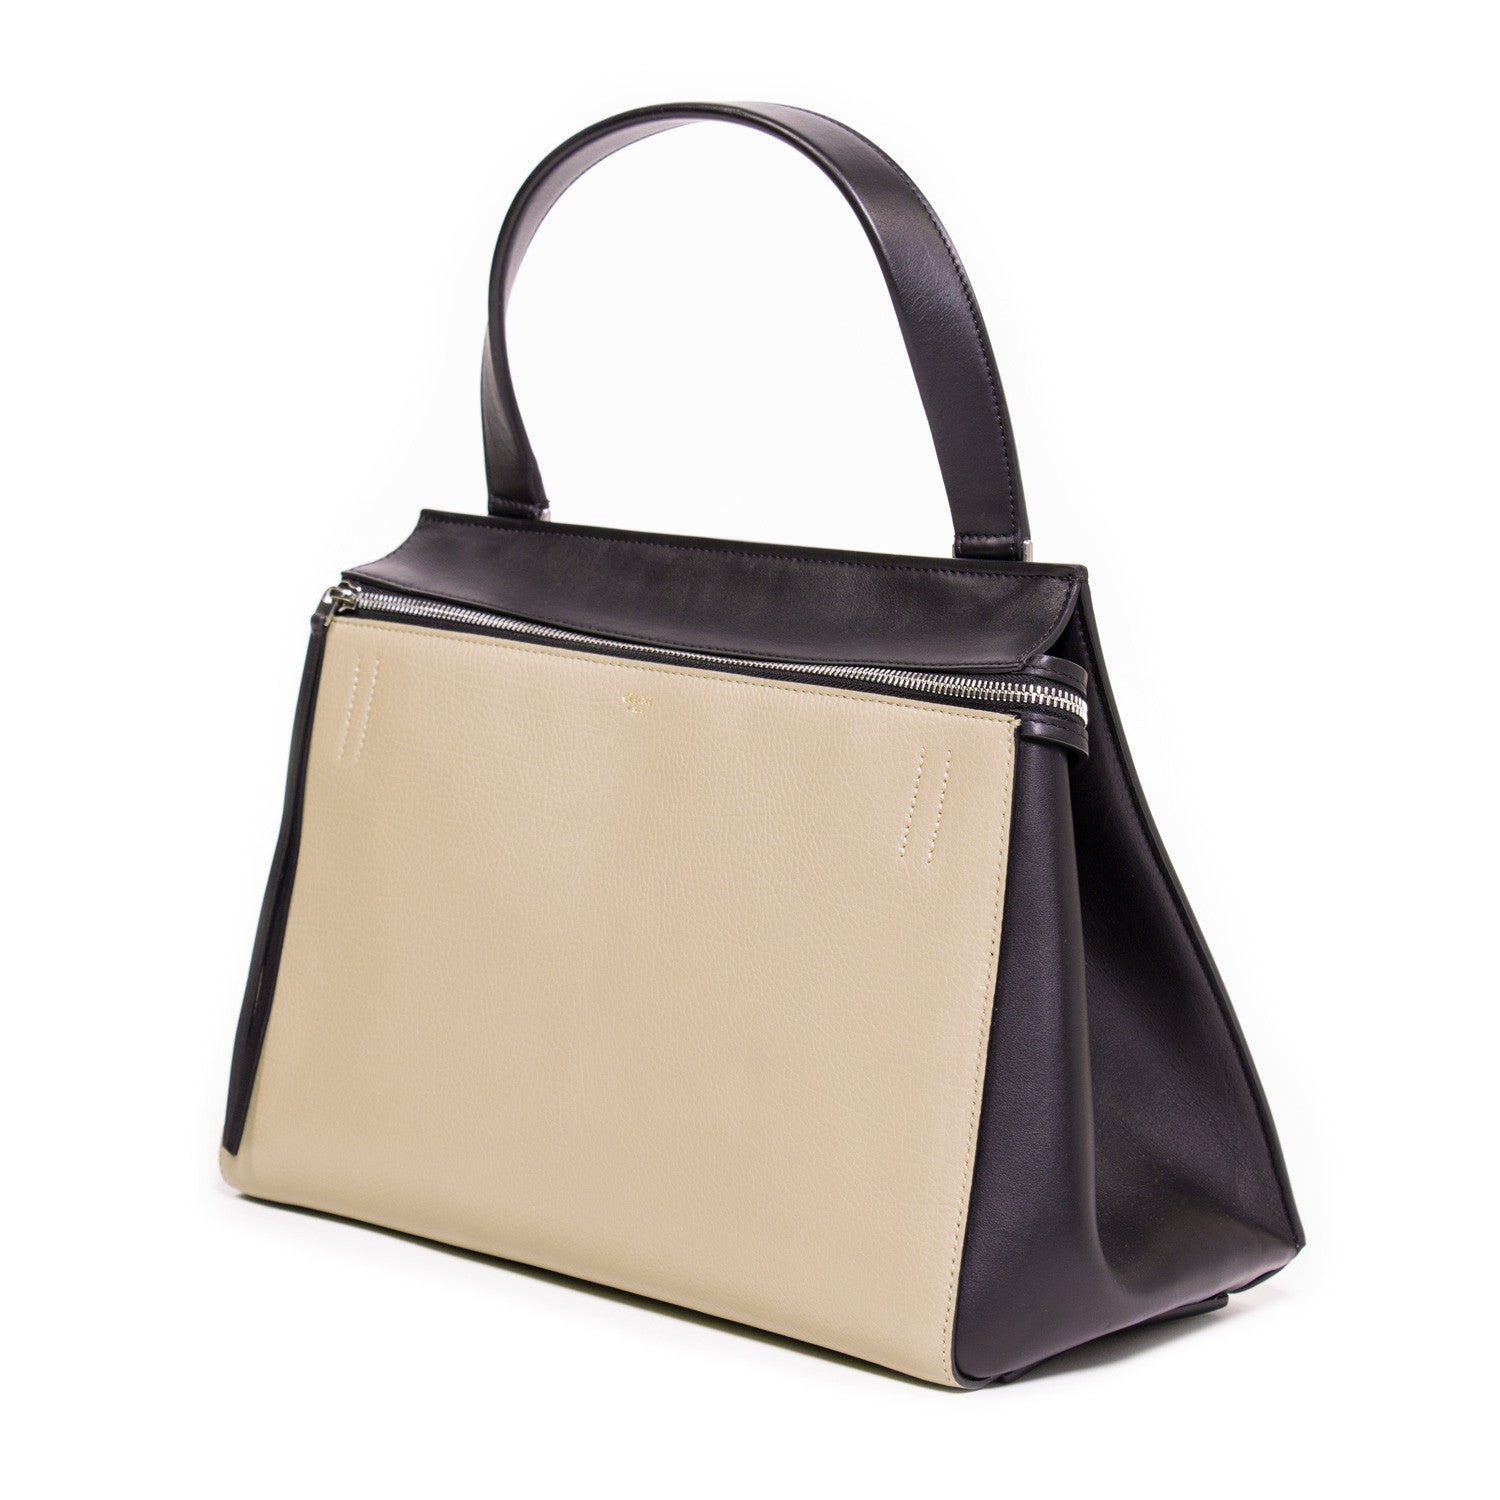 Shop authentic Celine Medium Edge Tote Bag at revogue for just USD 1,250.00